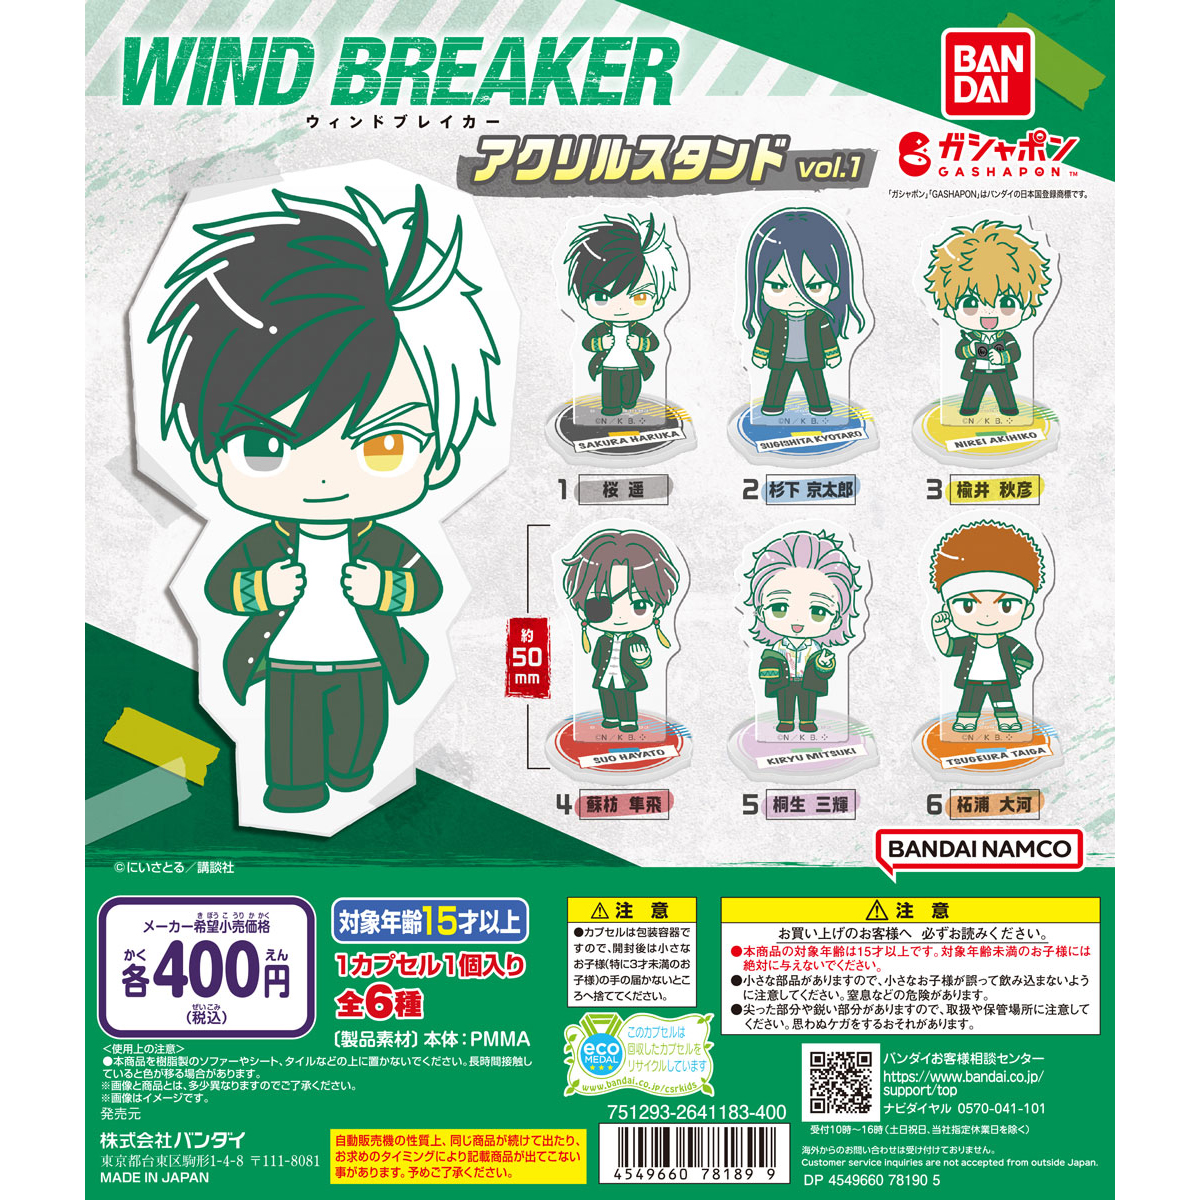 WIND BREAKER アクリルスタンド vol.1 | ナムコパークス オンライン ...